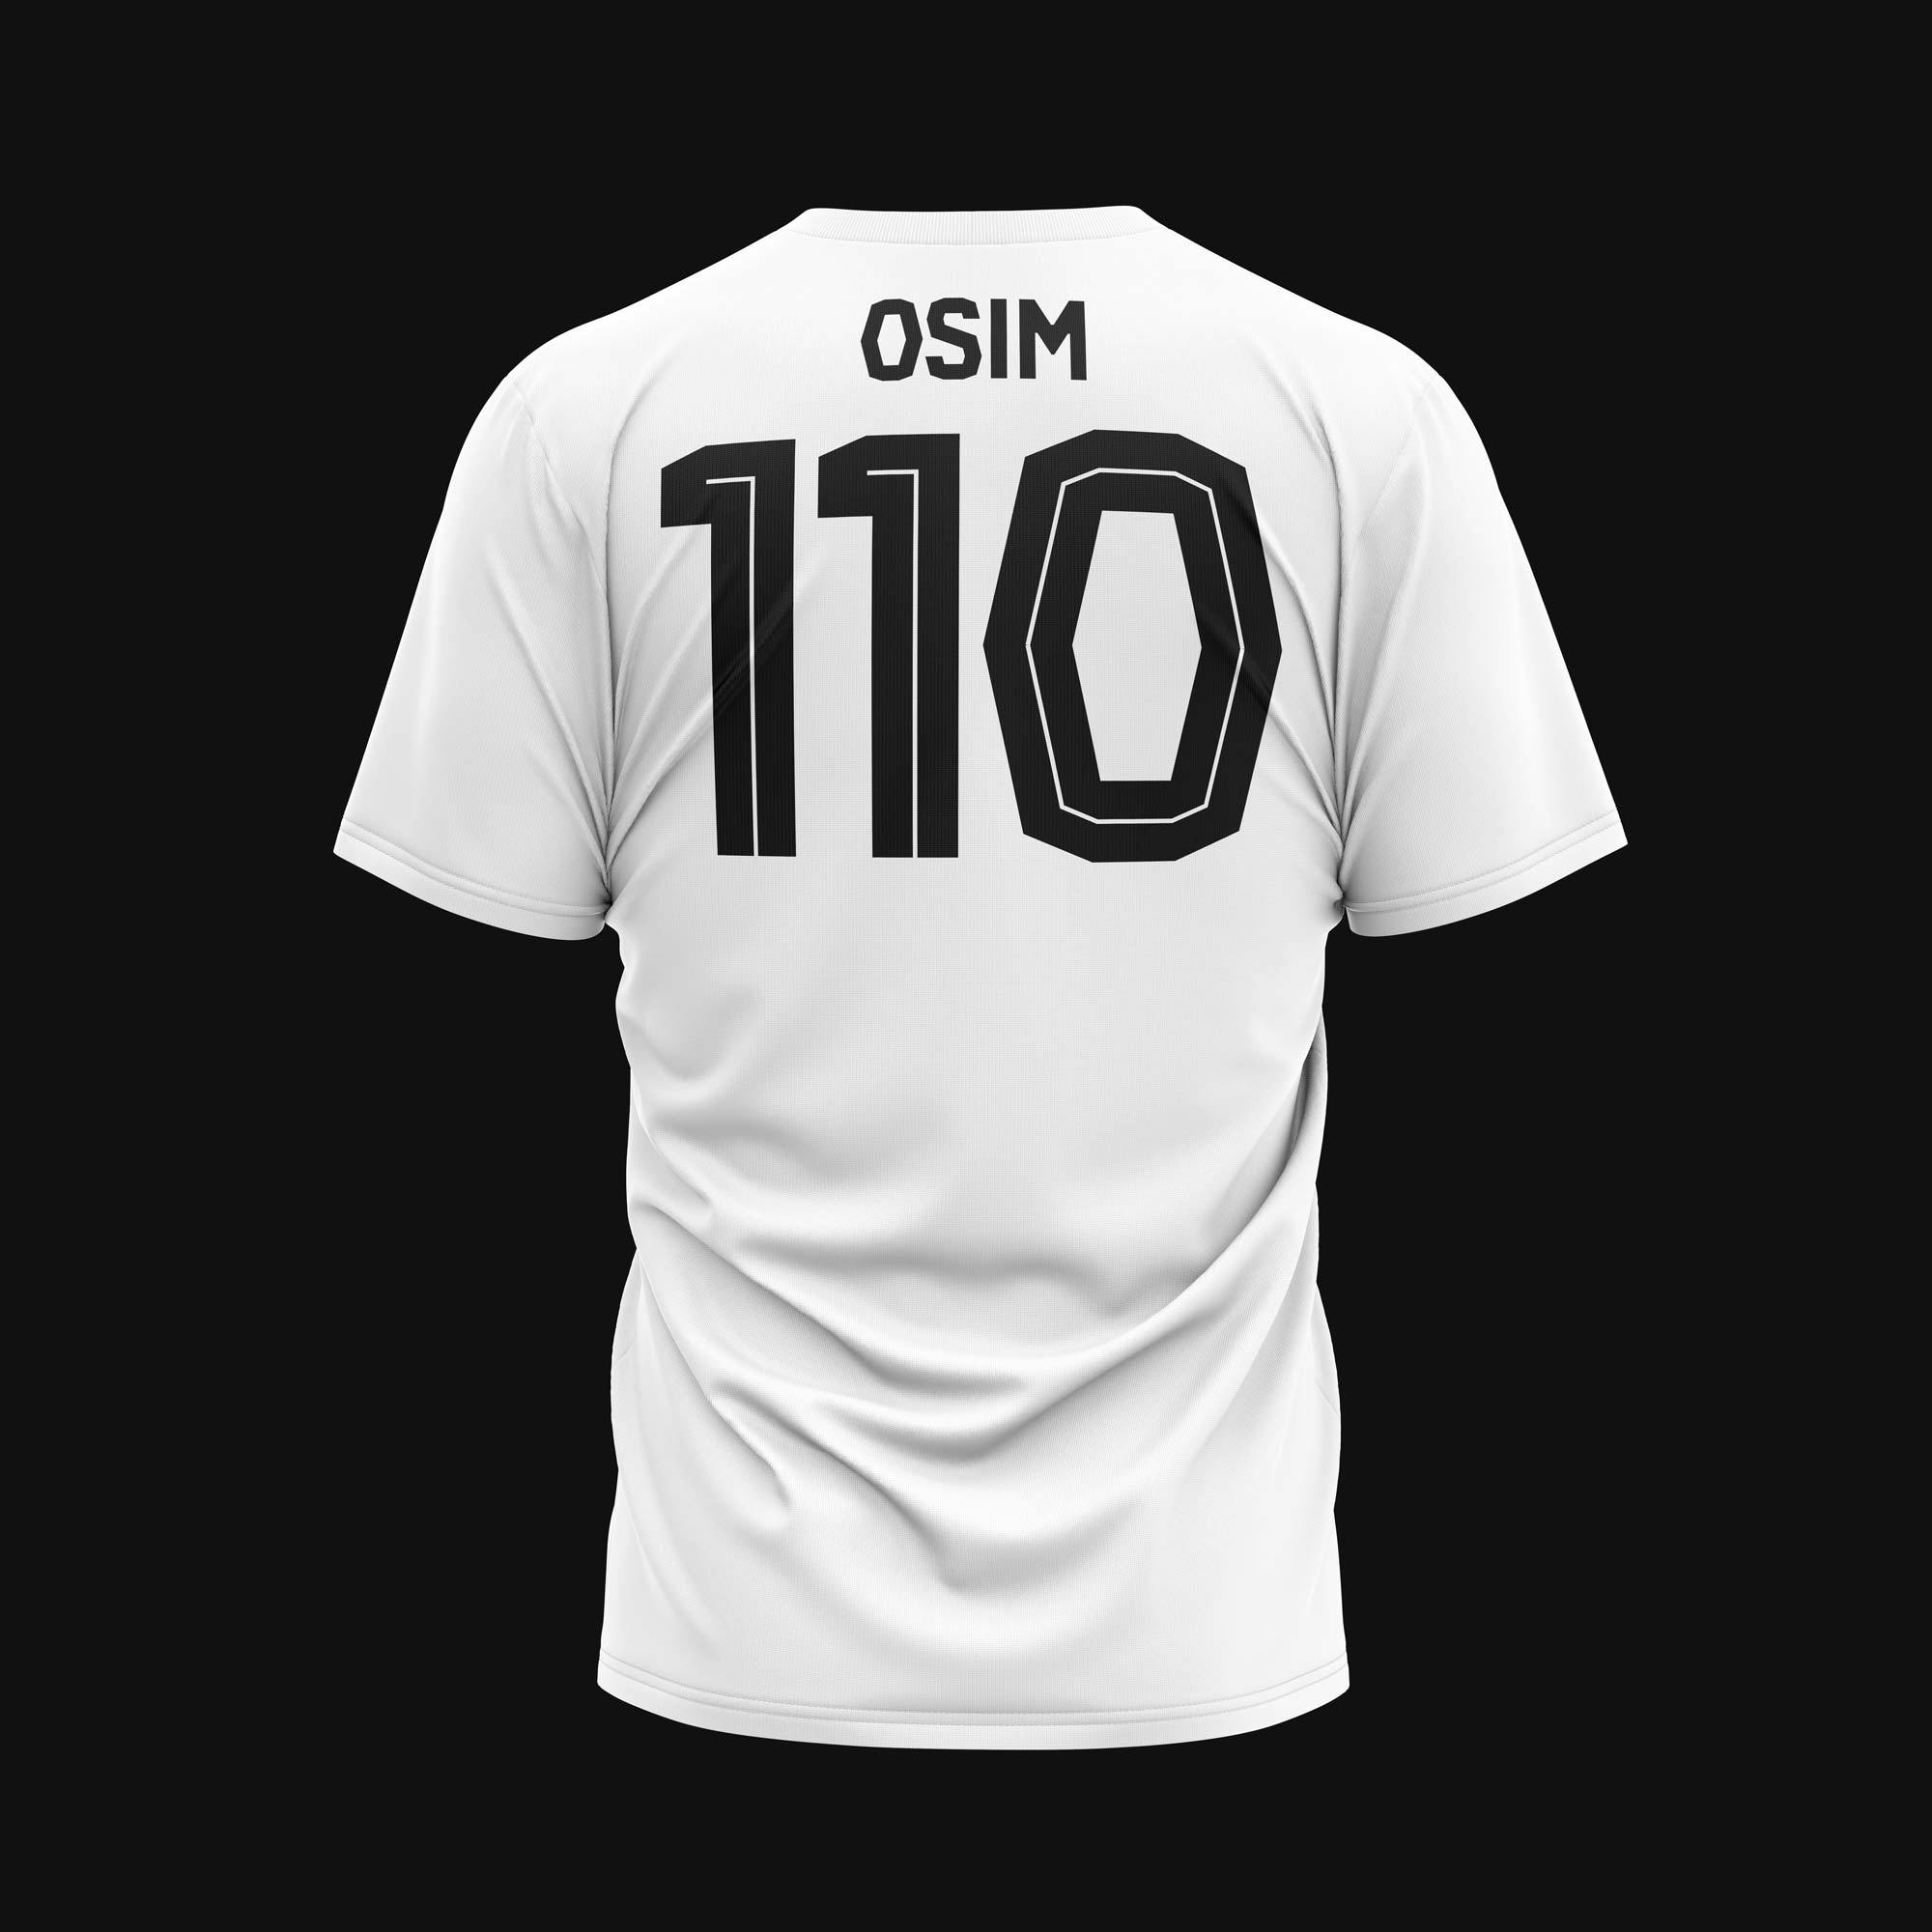 Version Osim - black on white